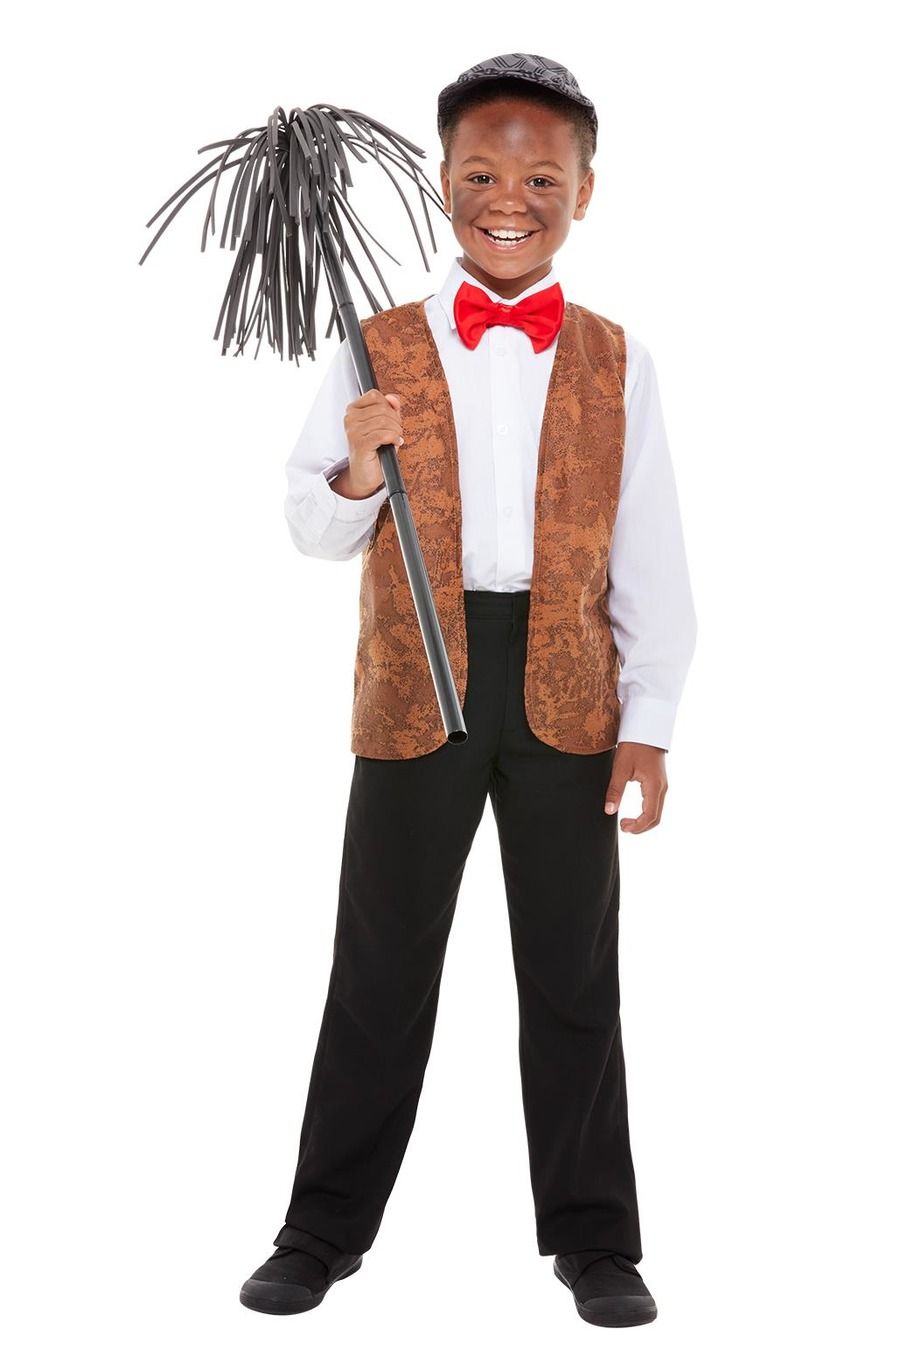 Chimney Sweep Costume